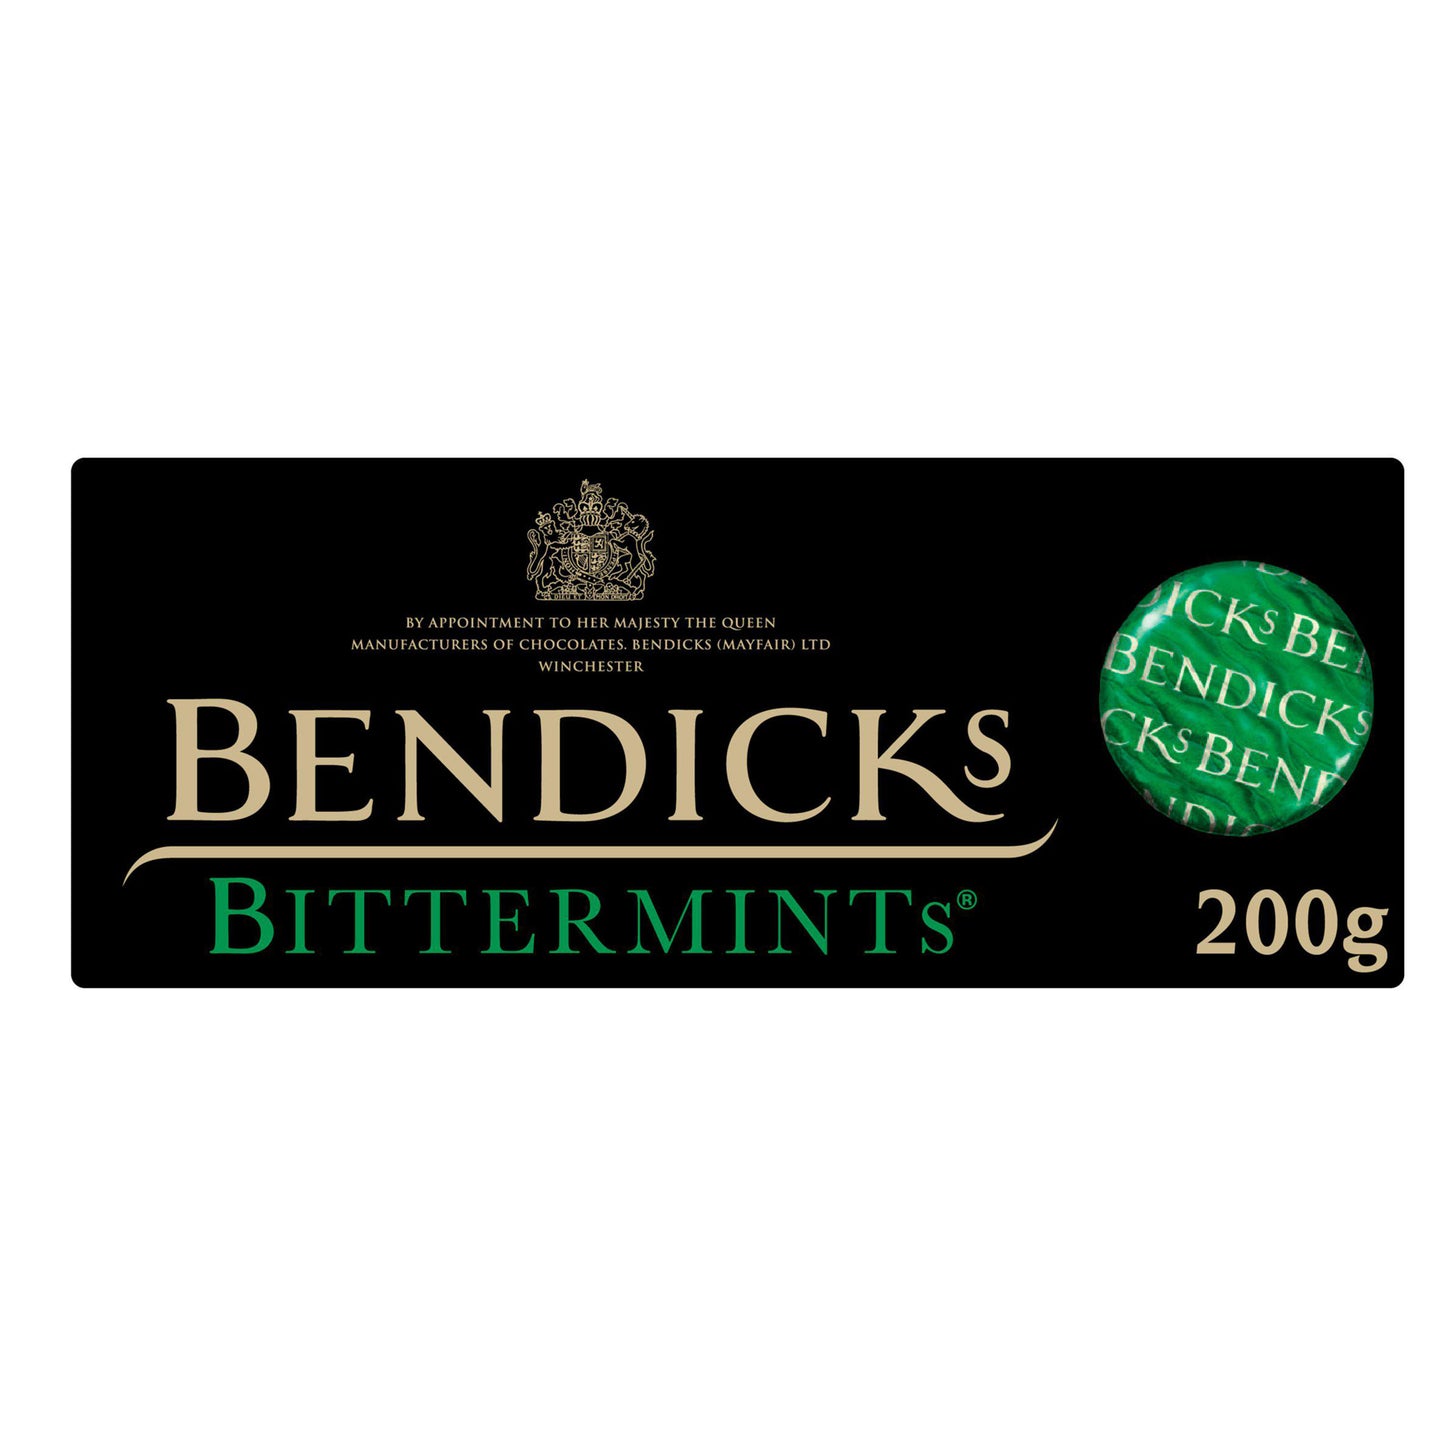 Bendicks Bittermints - 200g Bitter Chocolates - Gift Message